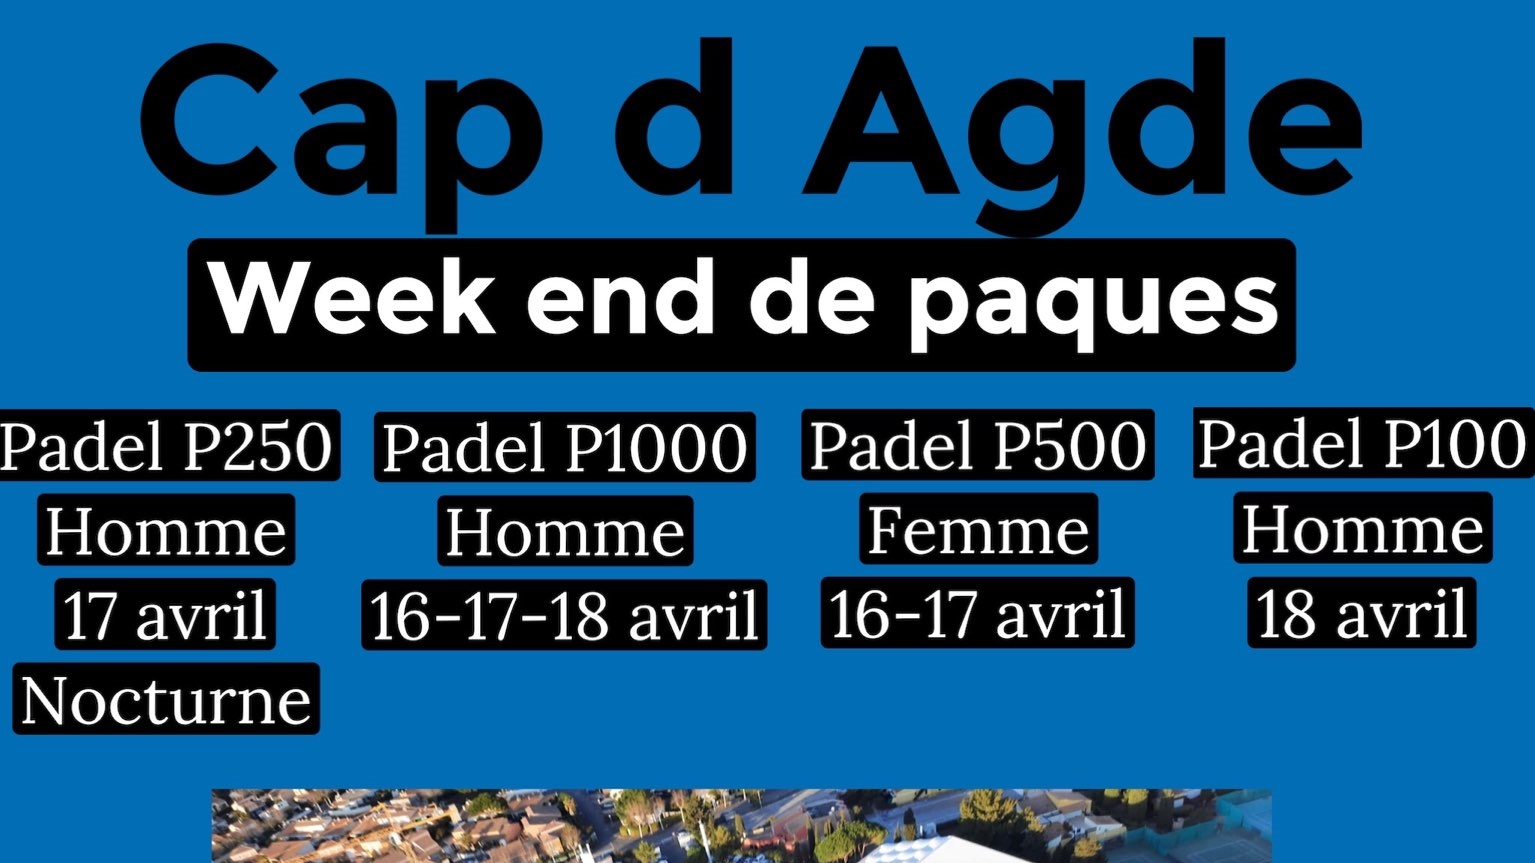 Cap d'Agde: P100 do P1000 od 16 kwietnia do 18